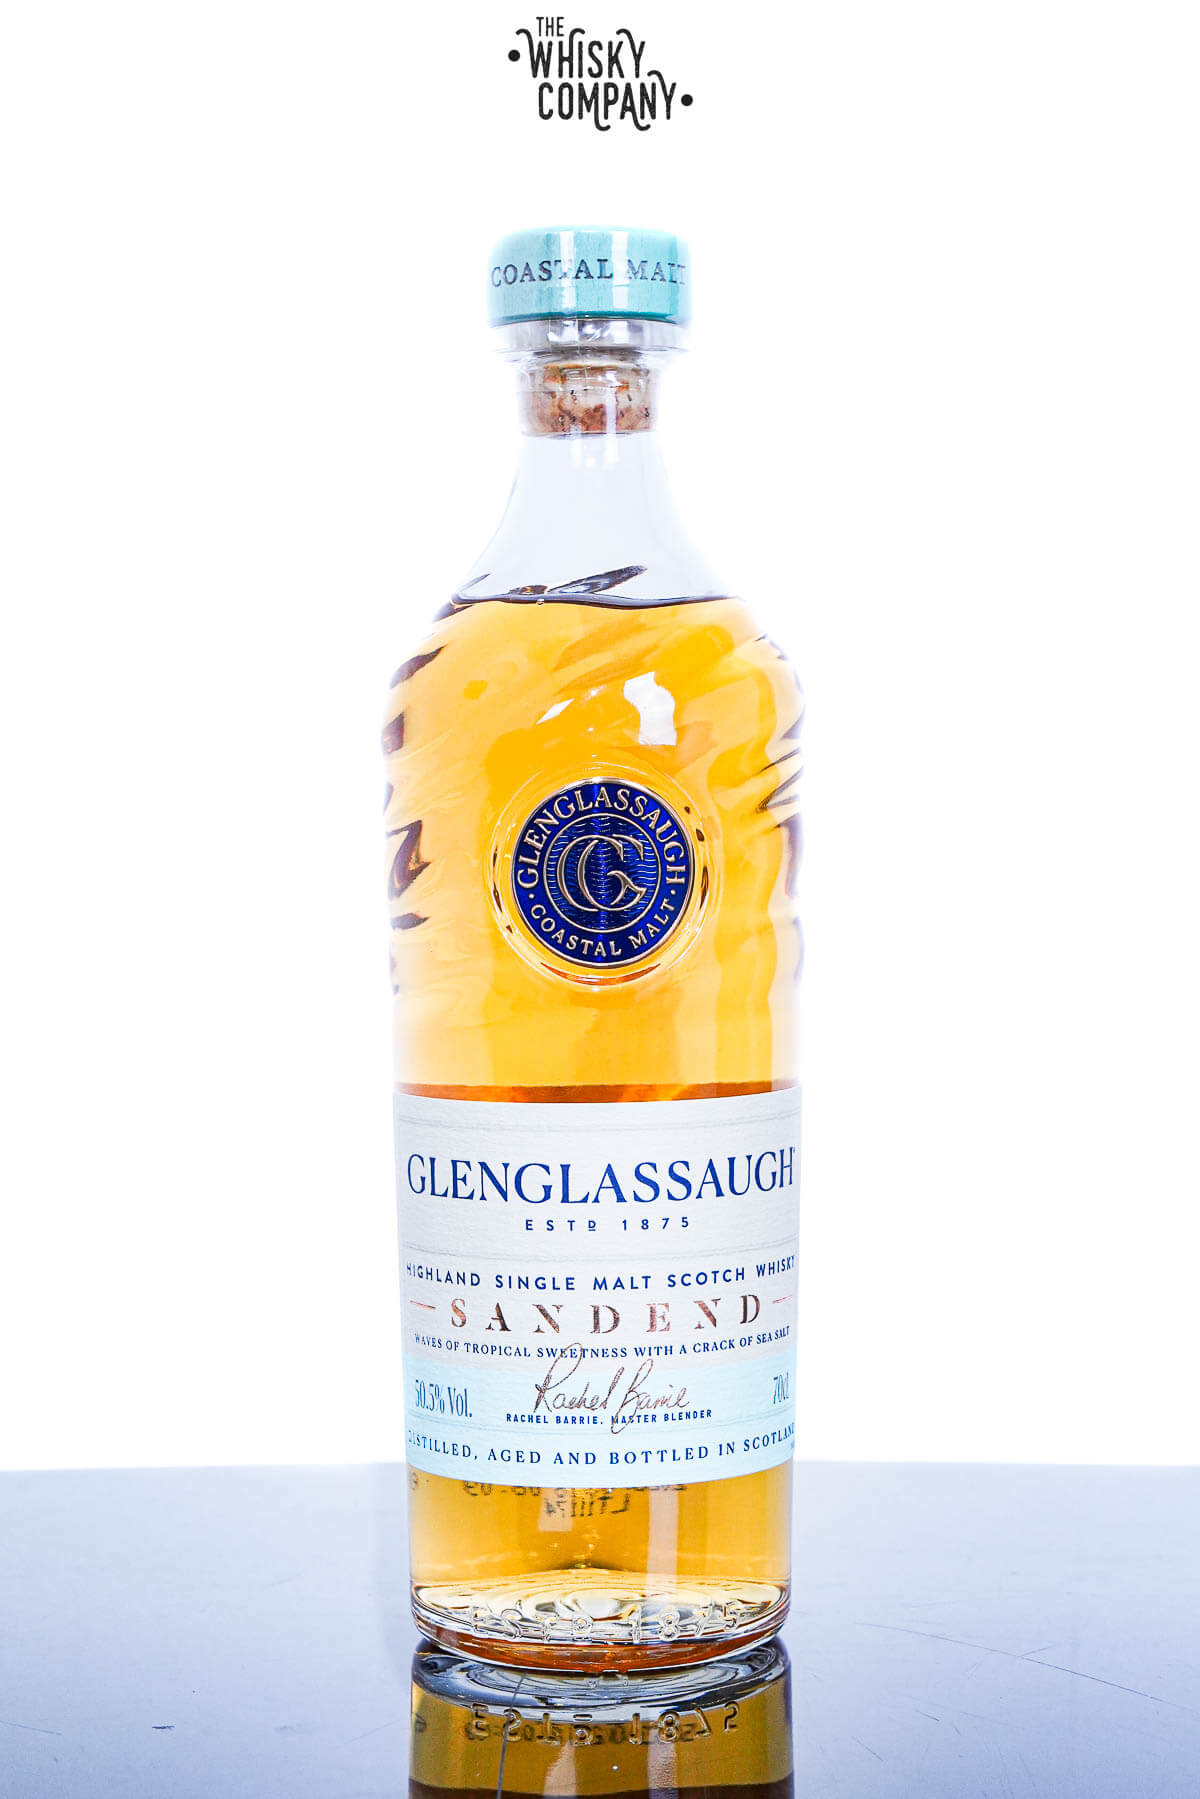 Maltwhisky - Glenglassaugh Sandend